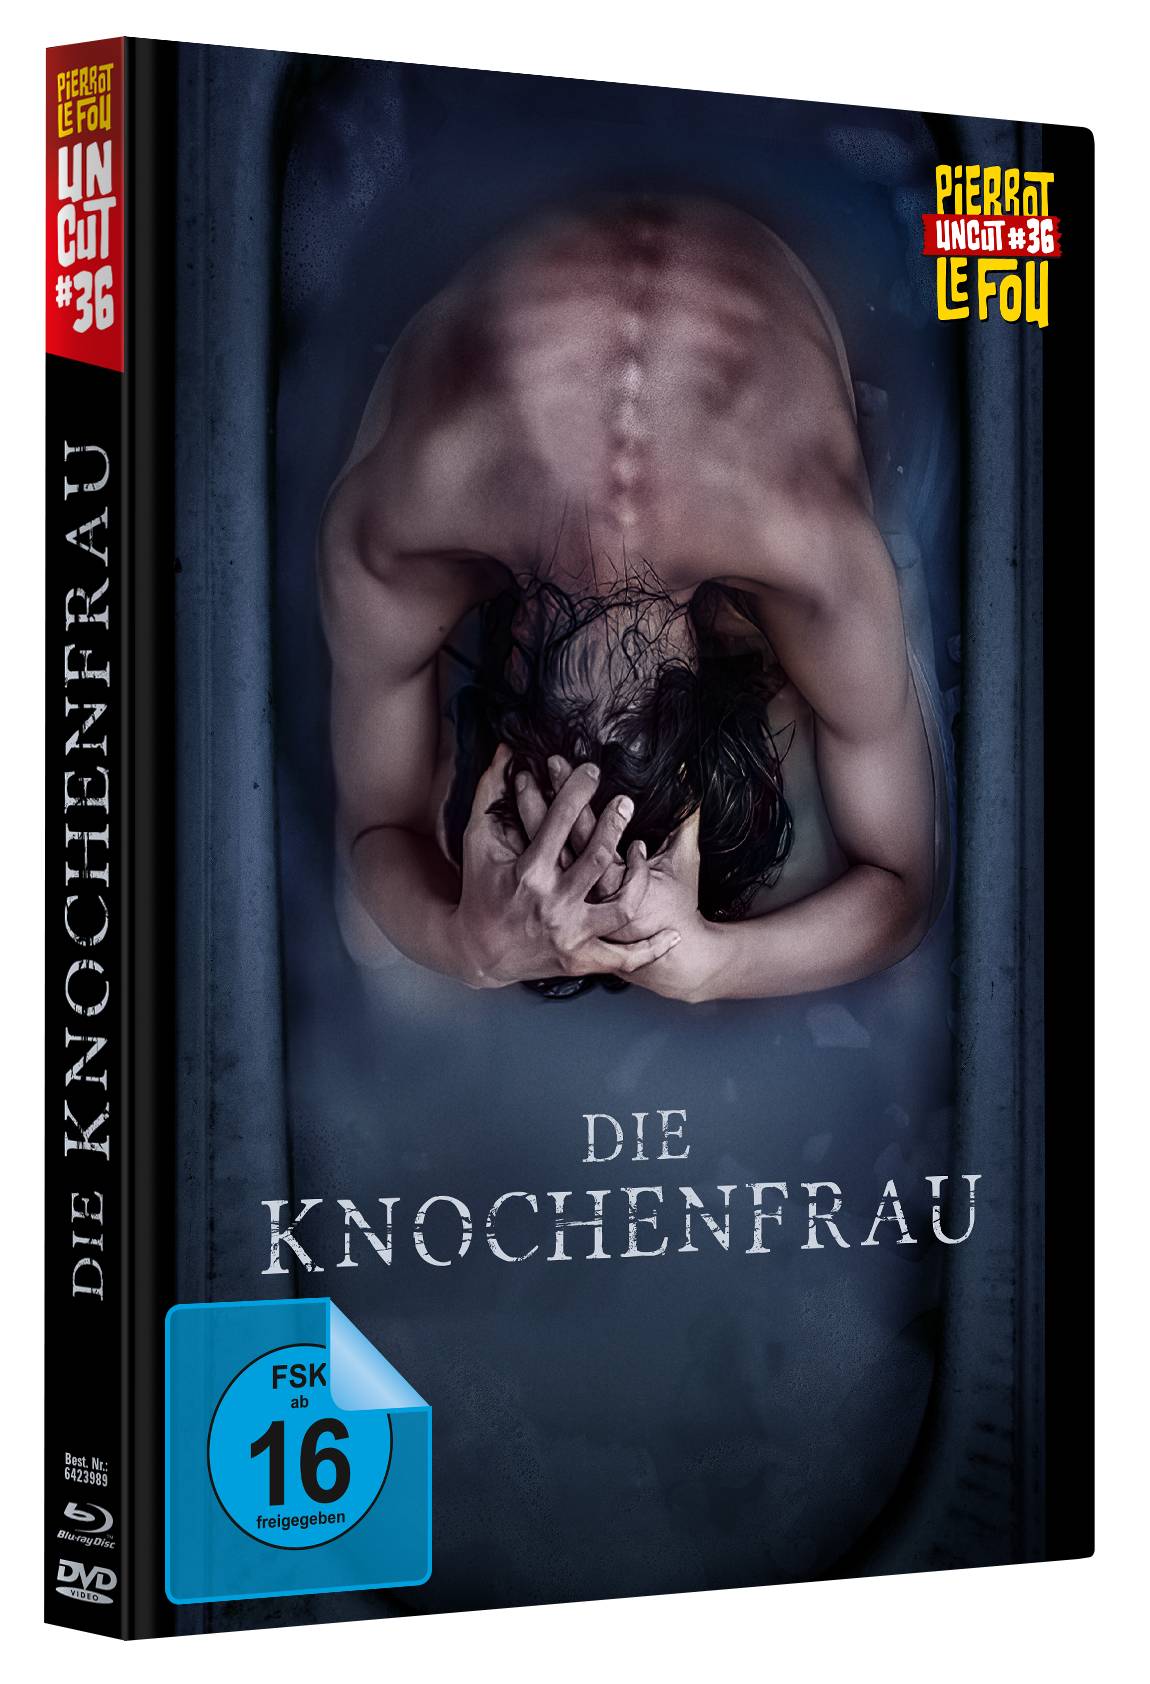 Die Knochenfrau - Limited Edition Mediabook (uncut) (Blu-ray + DVD)